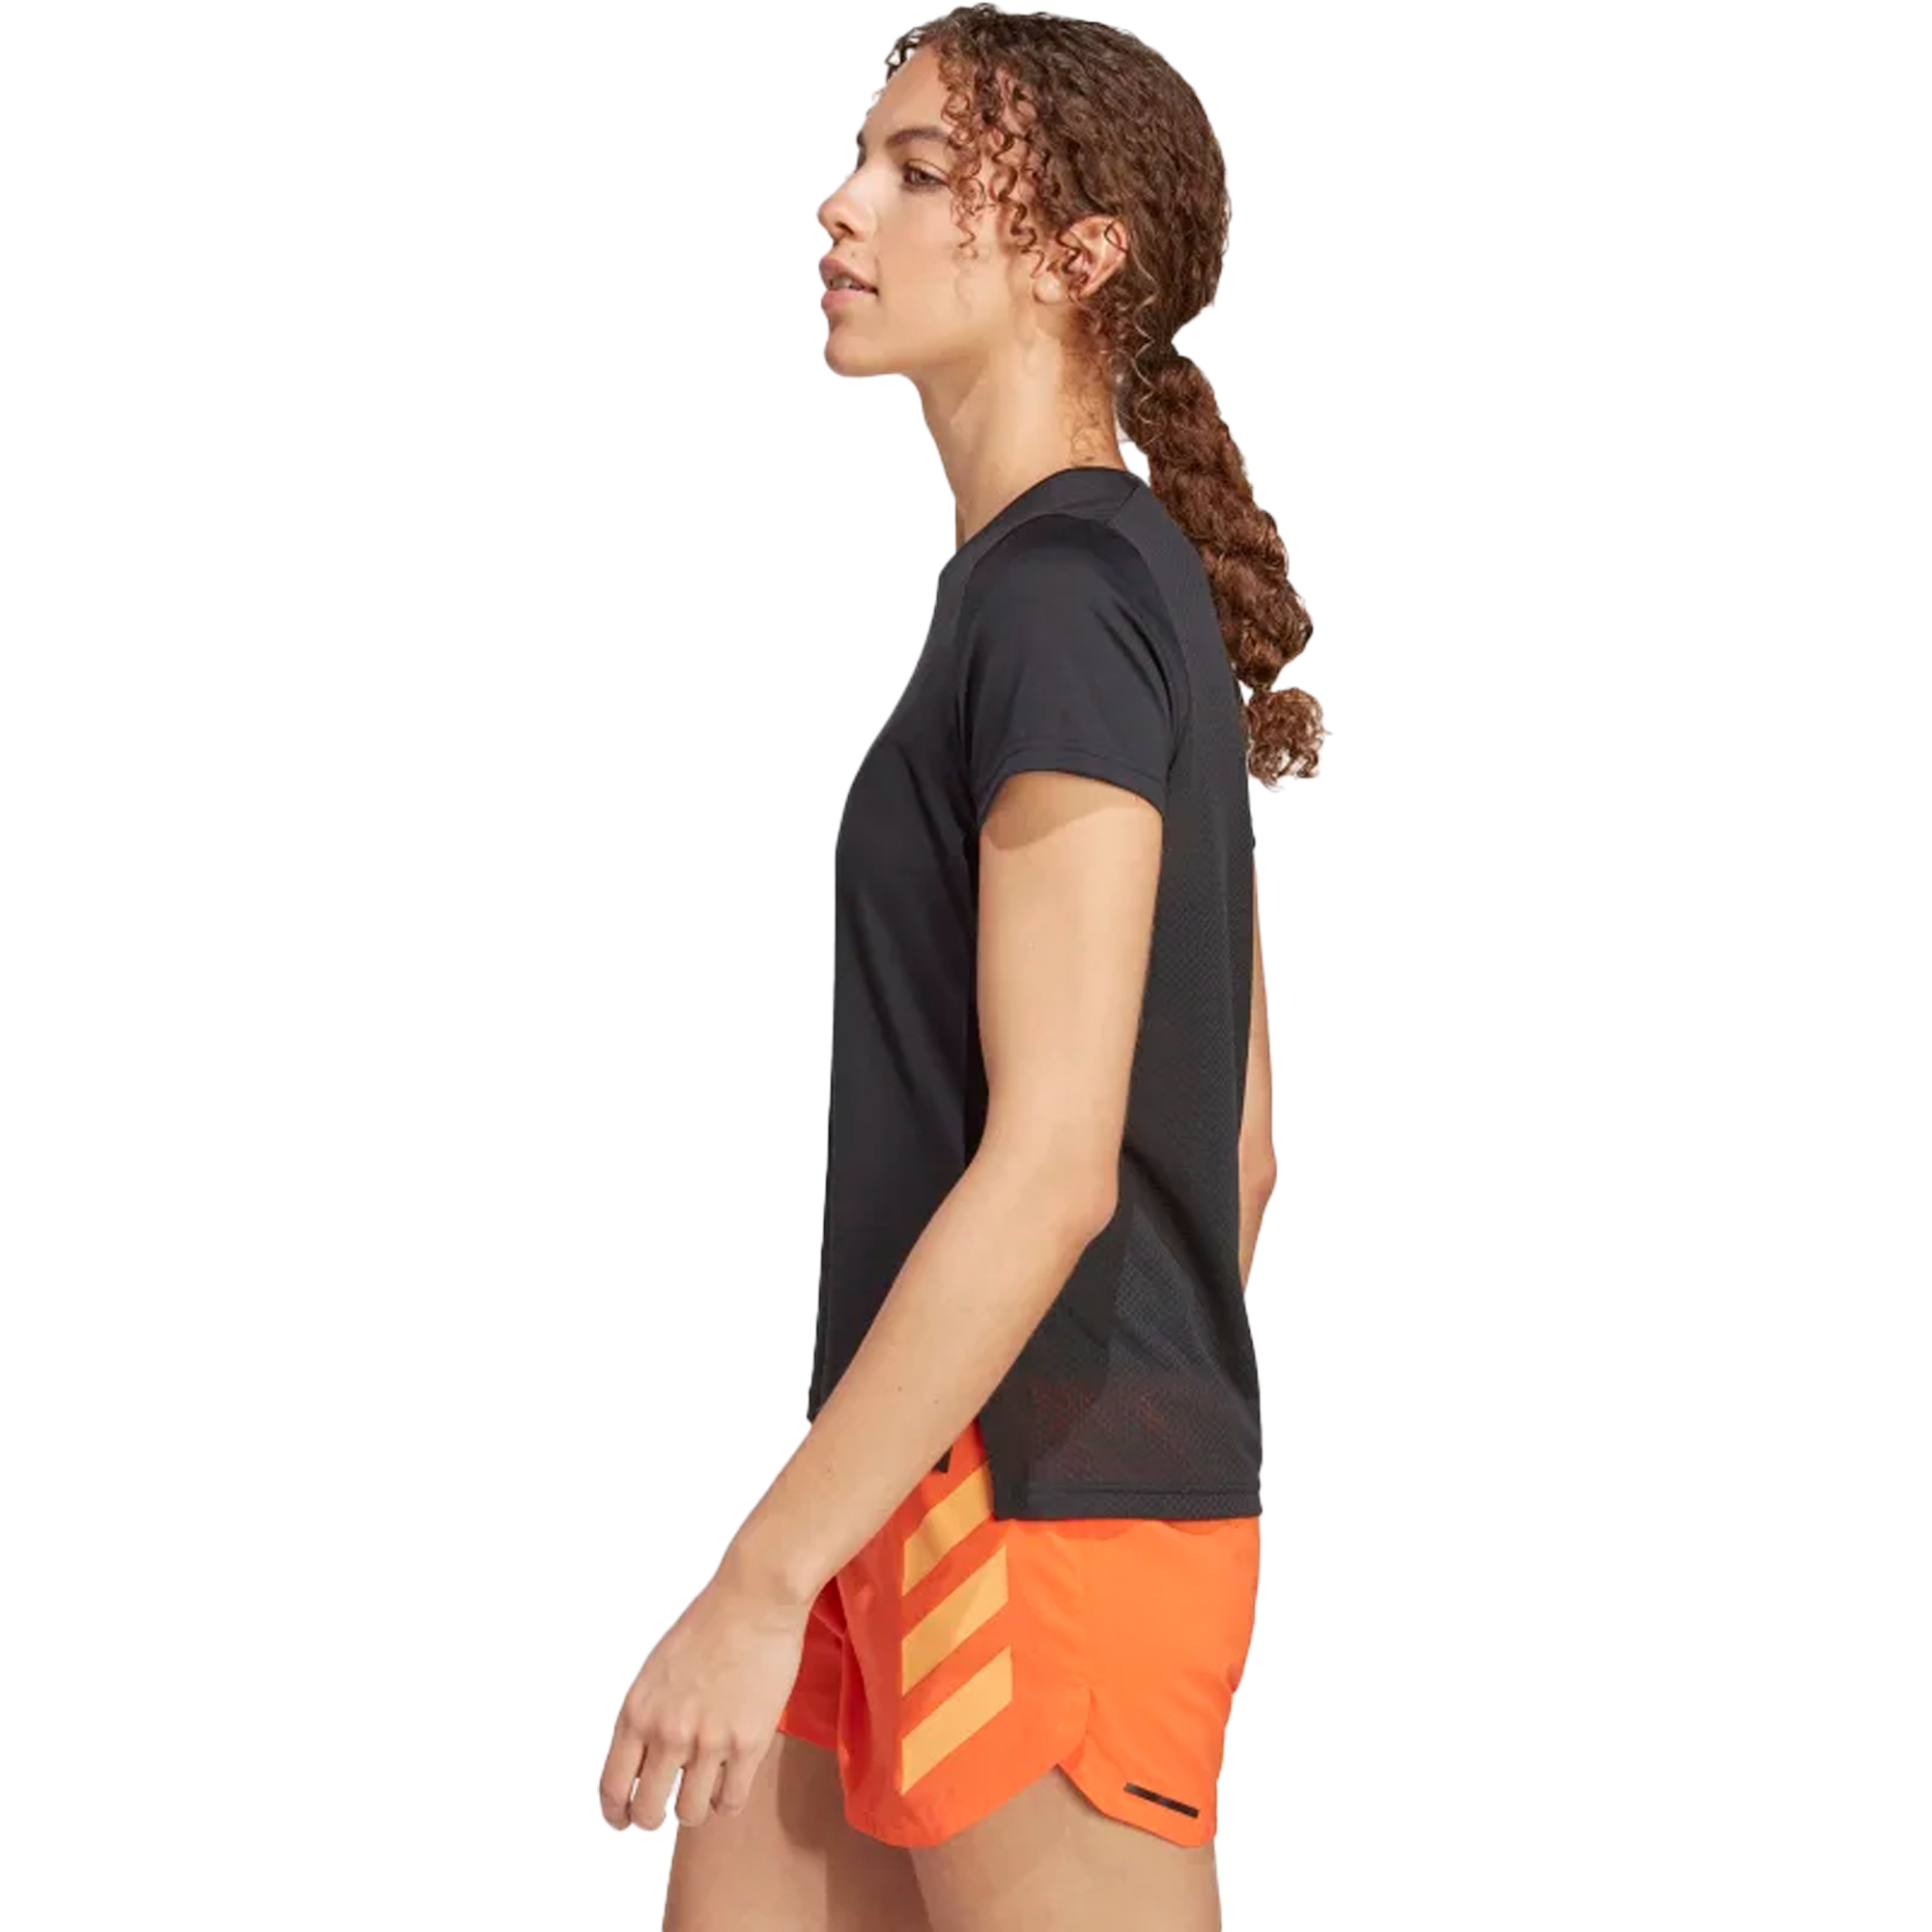 Adidas Terrex Agravic Women's Trail Running T-Shirt